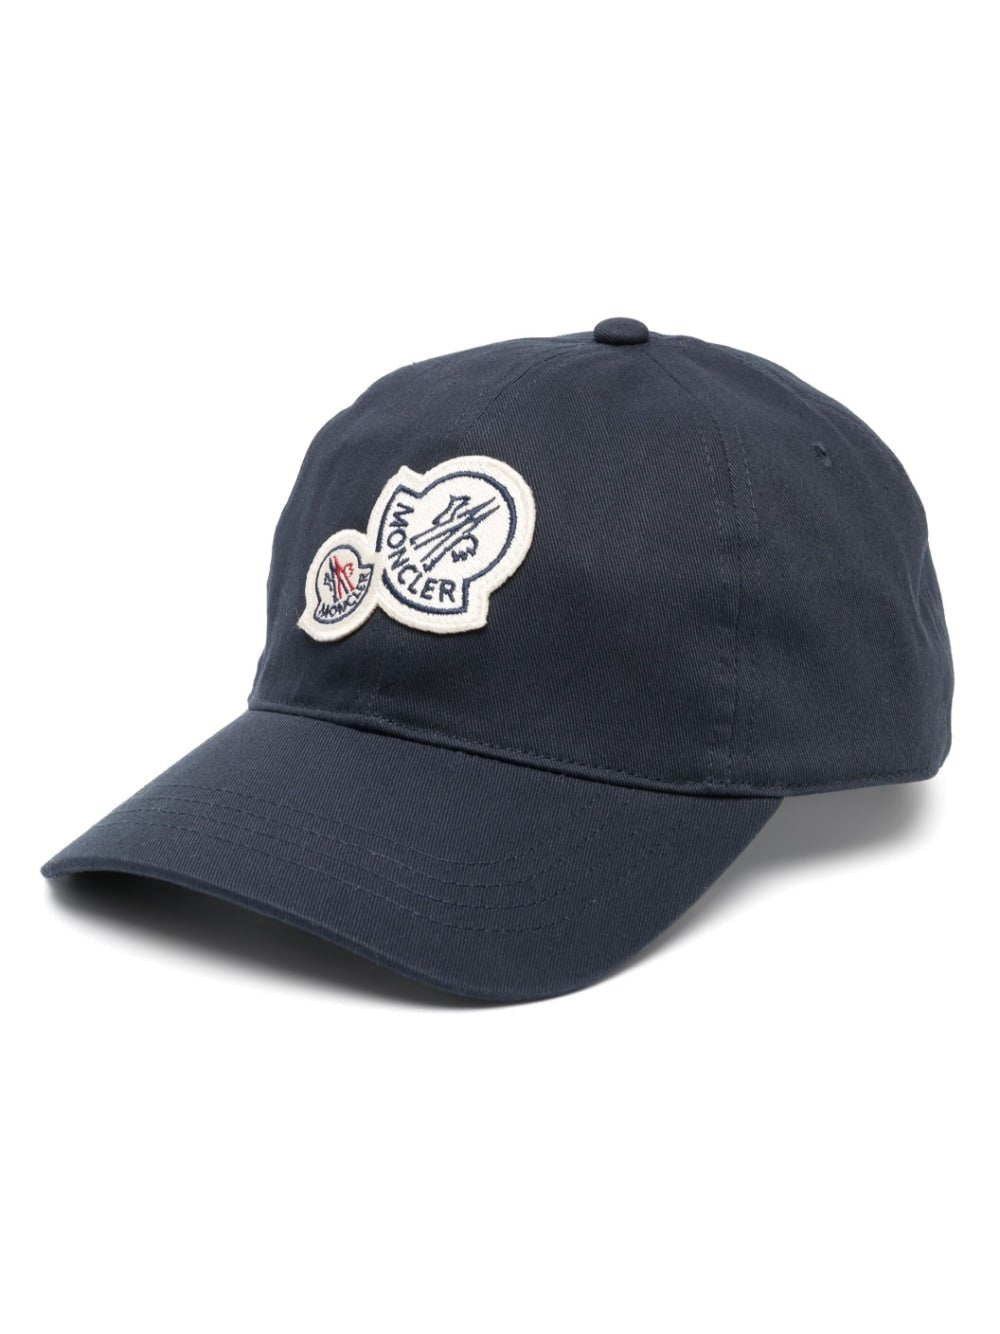 Moncler - Casquette de baseball navy double logo - Lothaire